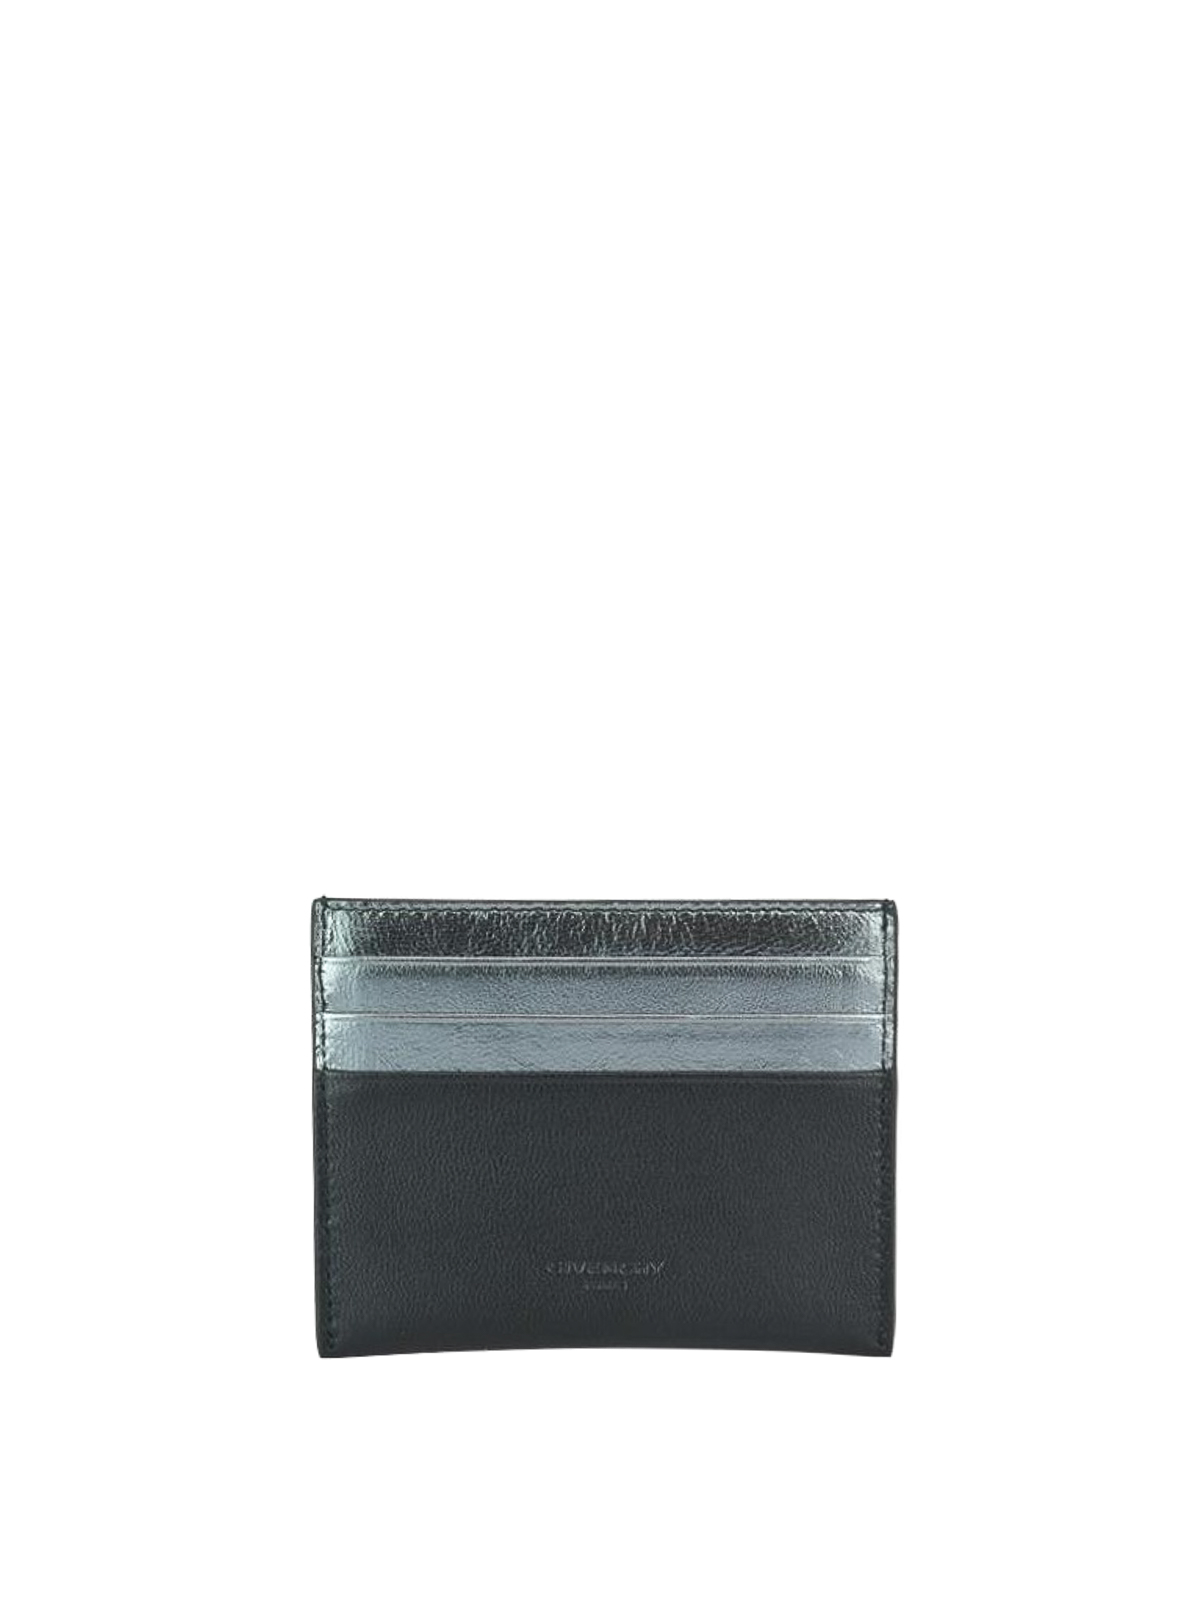 givenchy emblem wallet